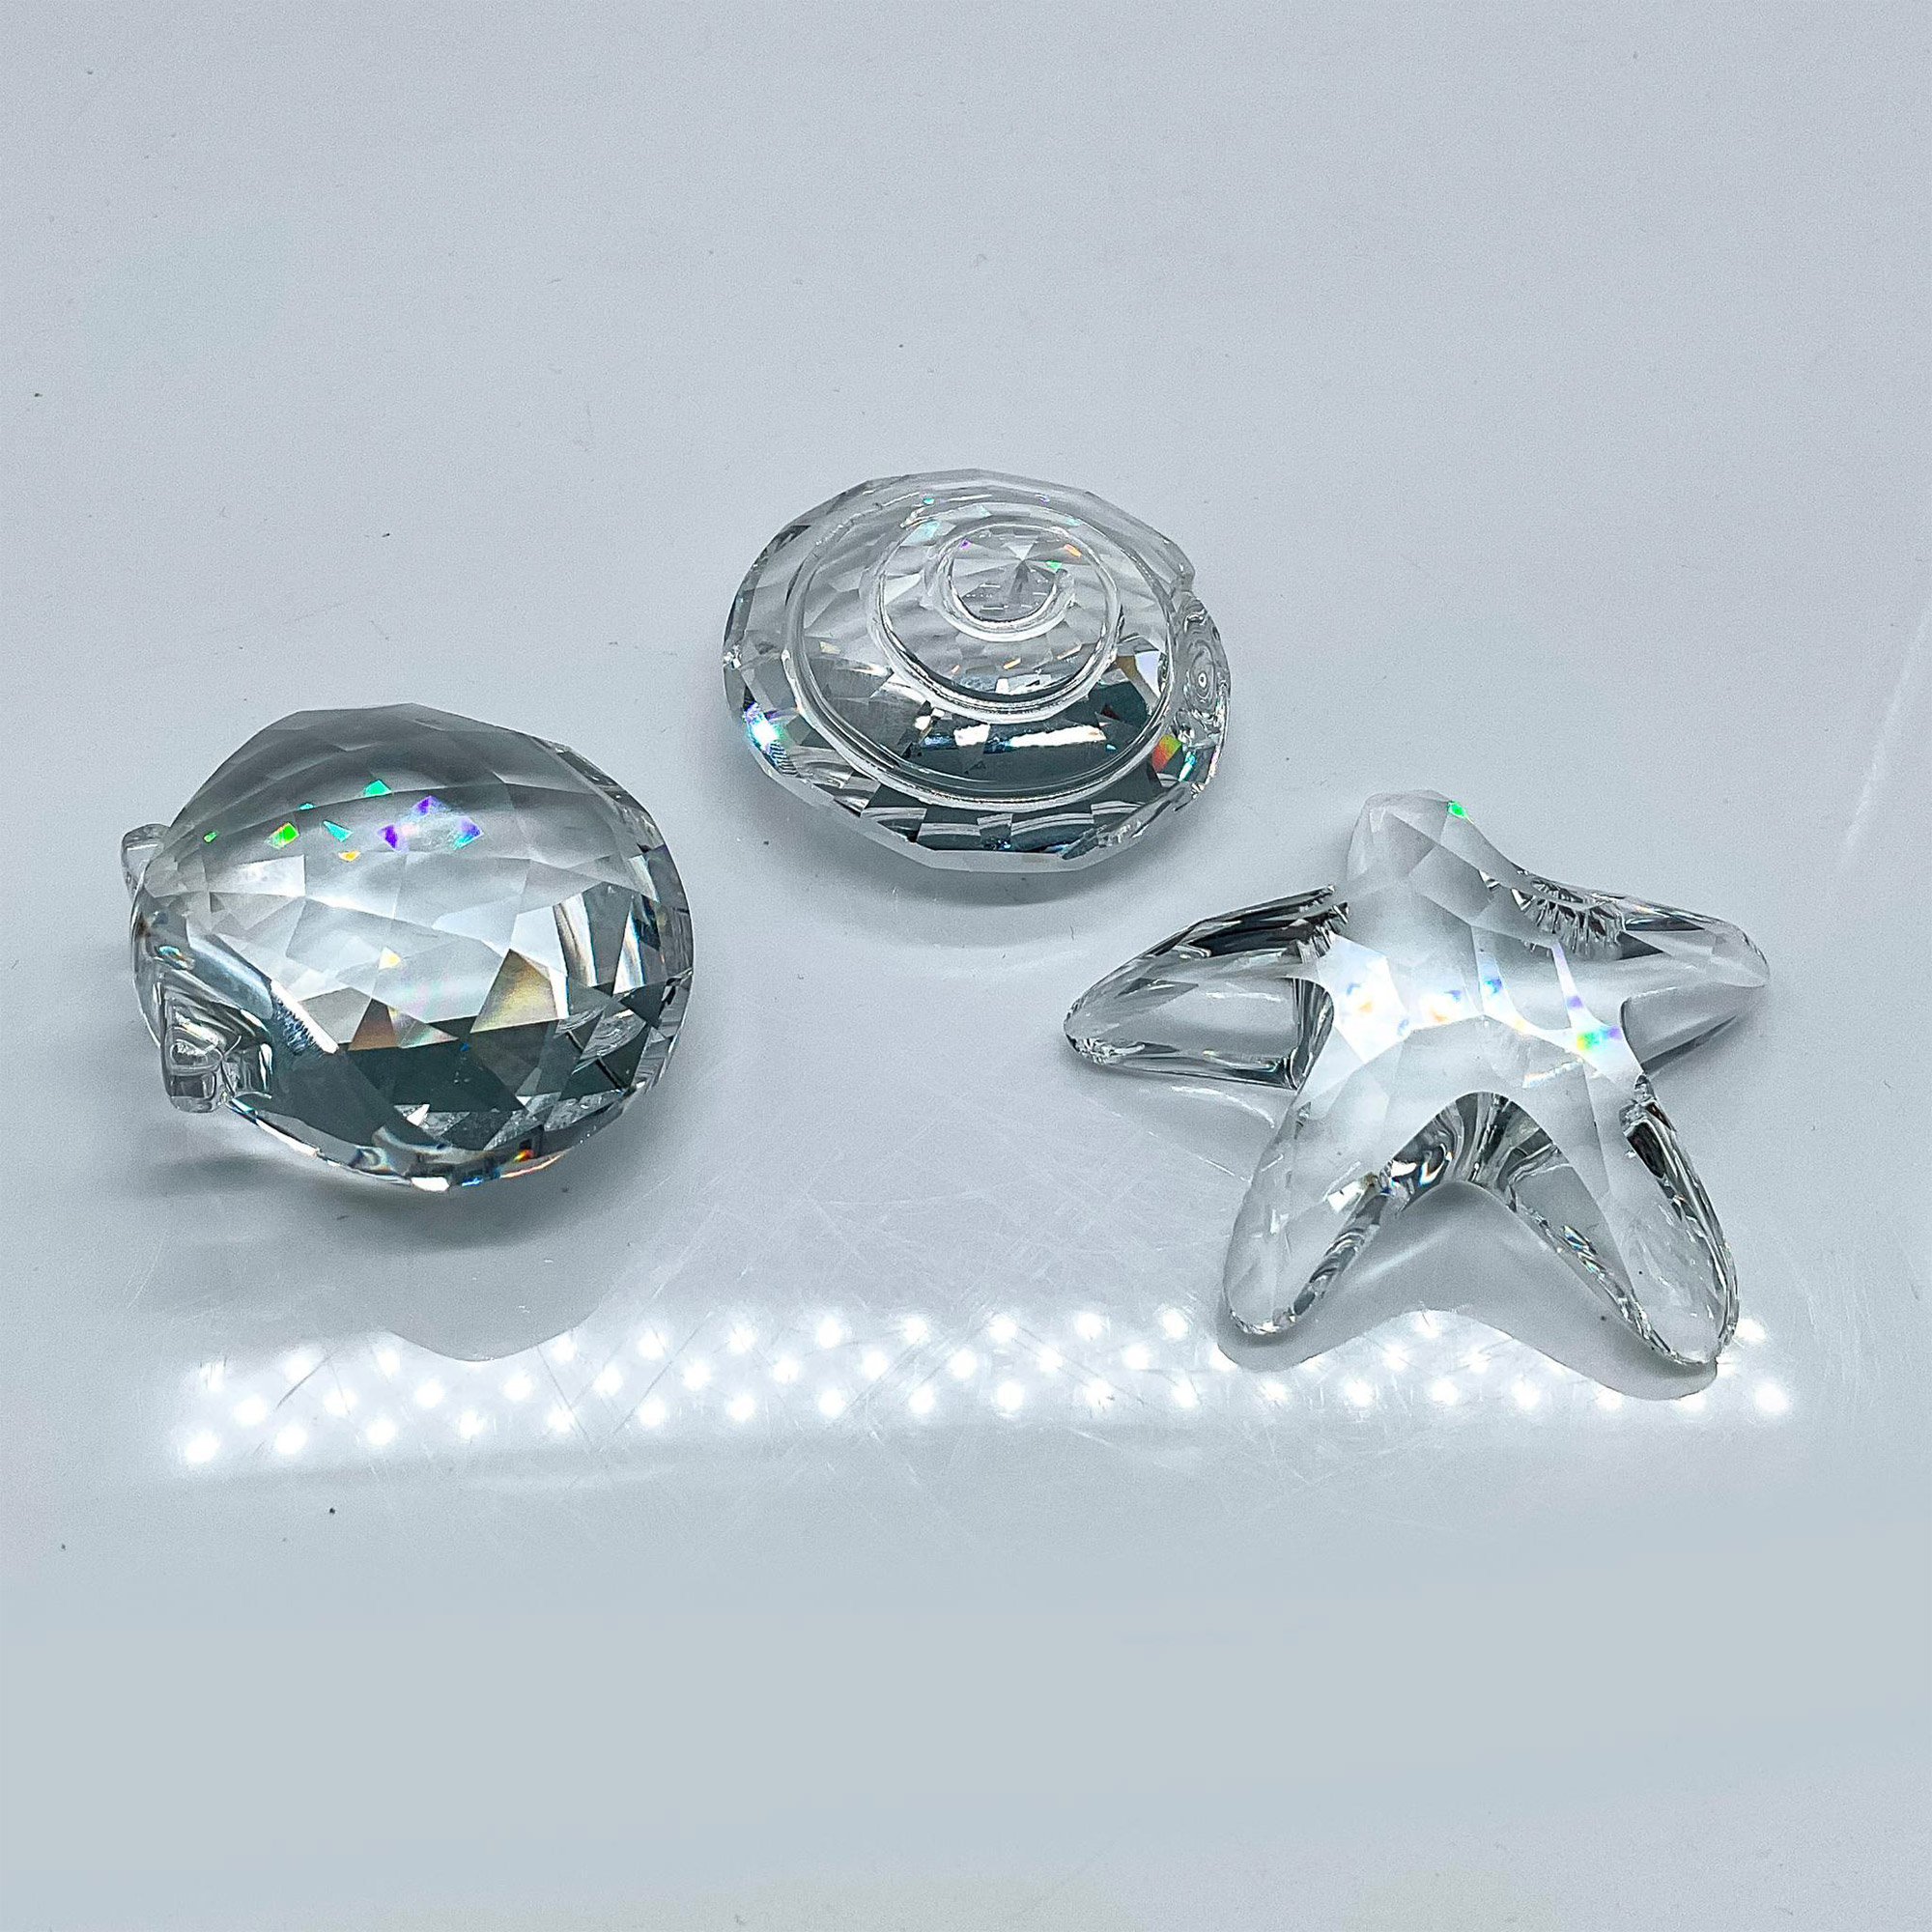 3pc Swarovski Crystal Paperweights, Shells